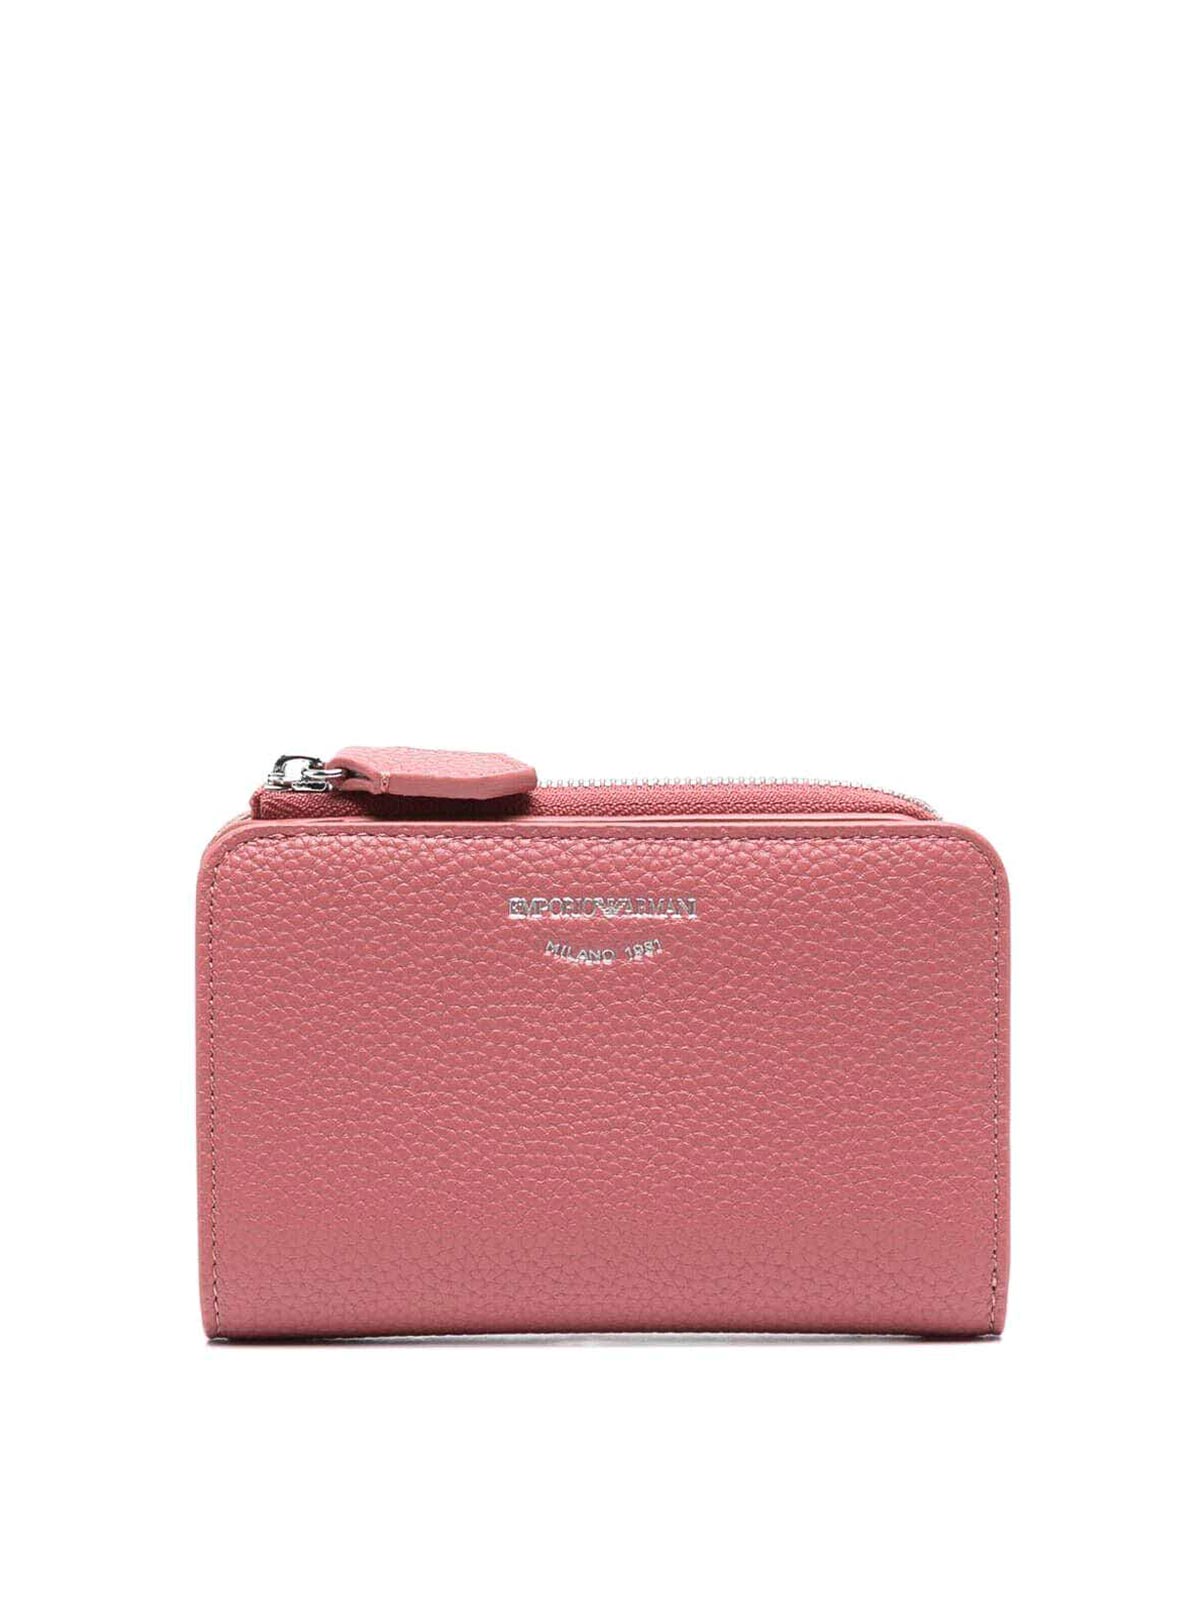 Emporio Armani Credit Card Case In Pink